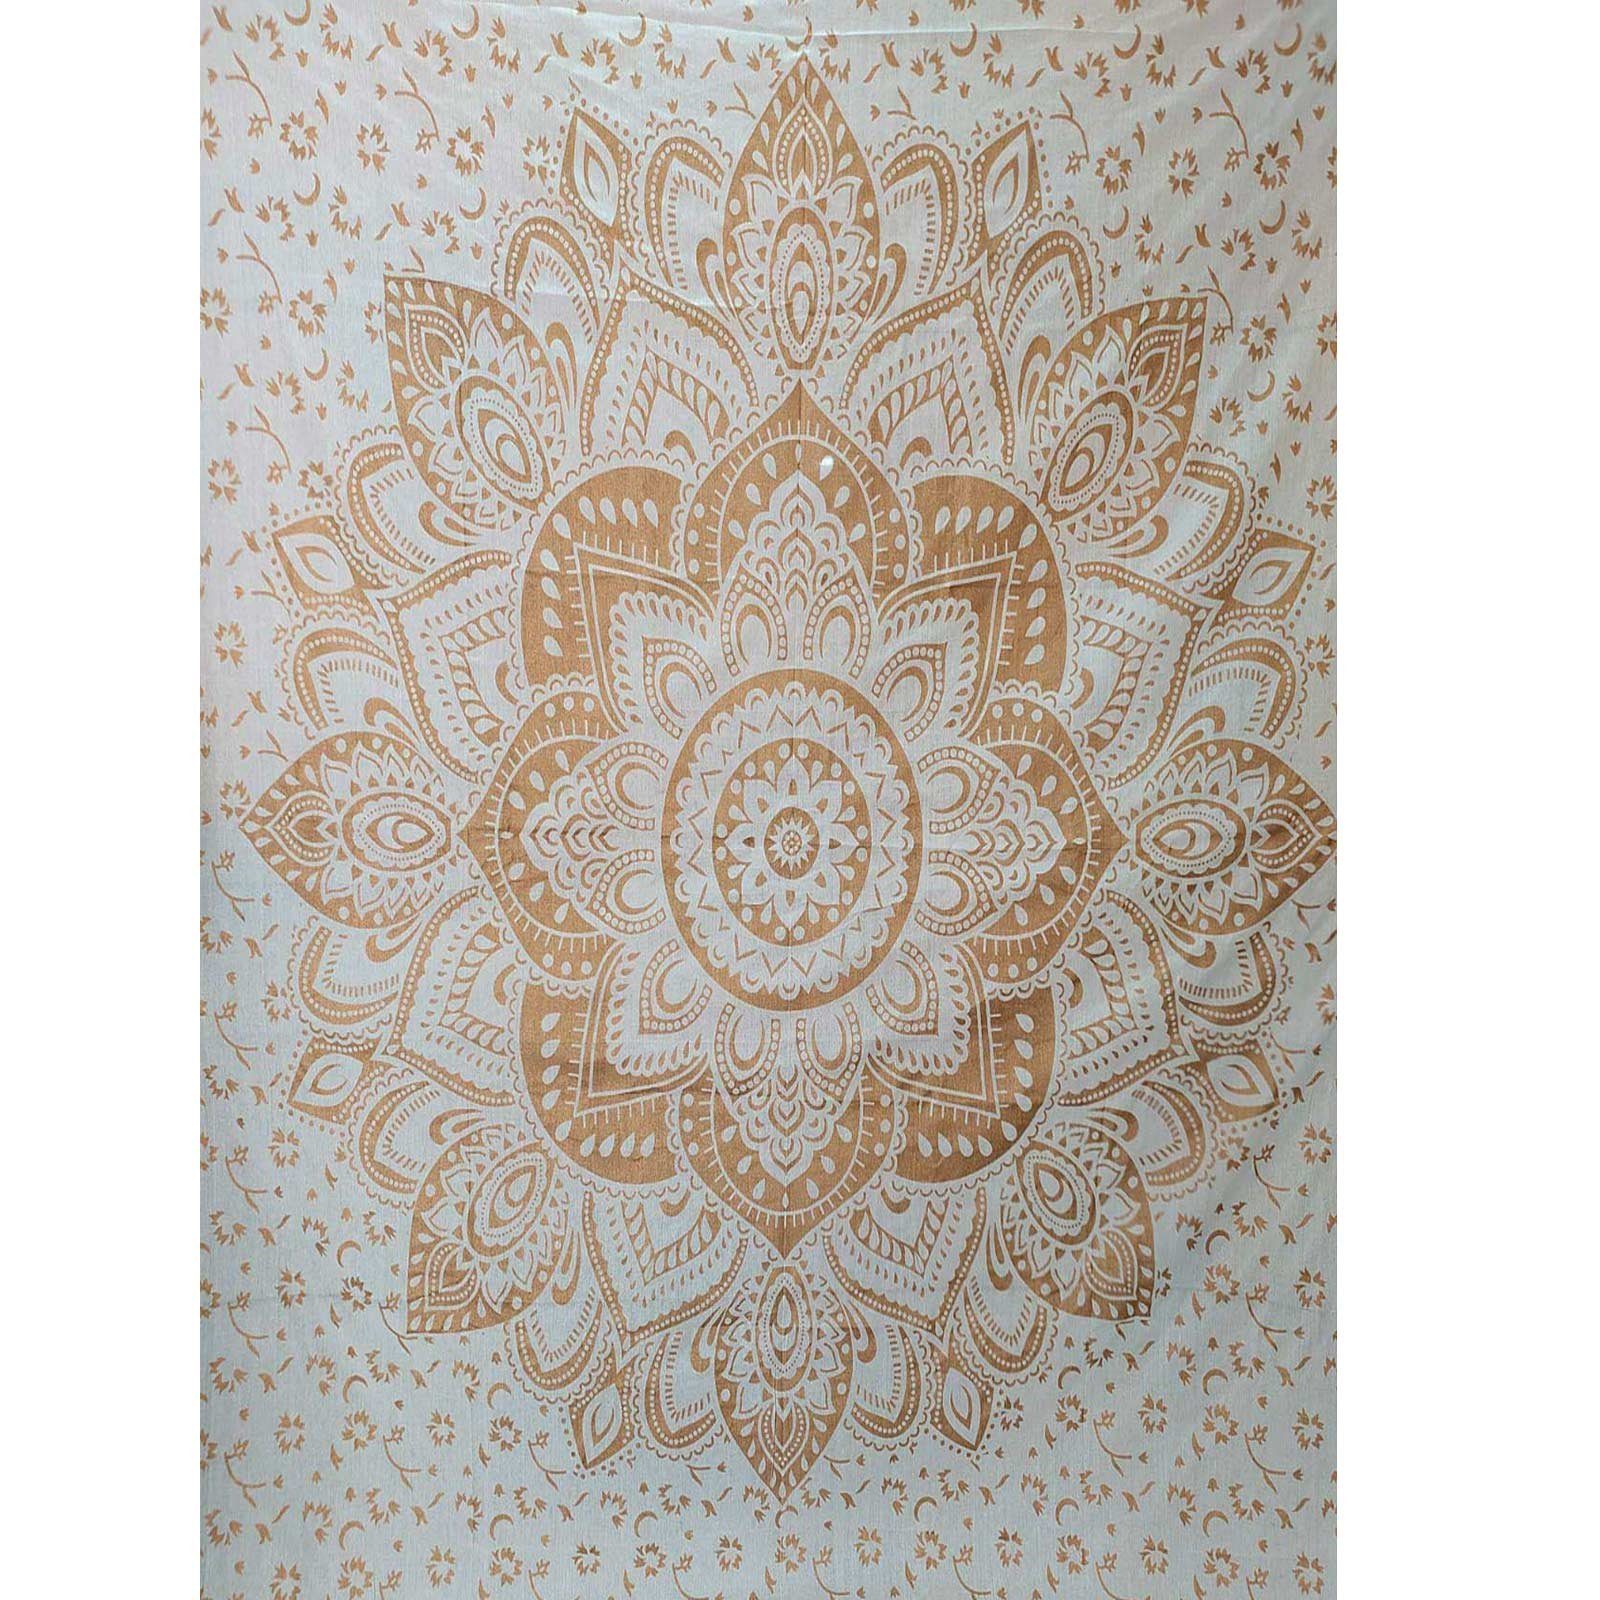 Wandteppich Tagesdecke Wandbehang Dekotuch Golden White Lotus Mandala  ca.200x135cm, KUNST UND MAGIE